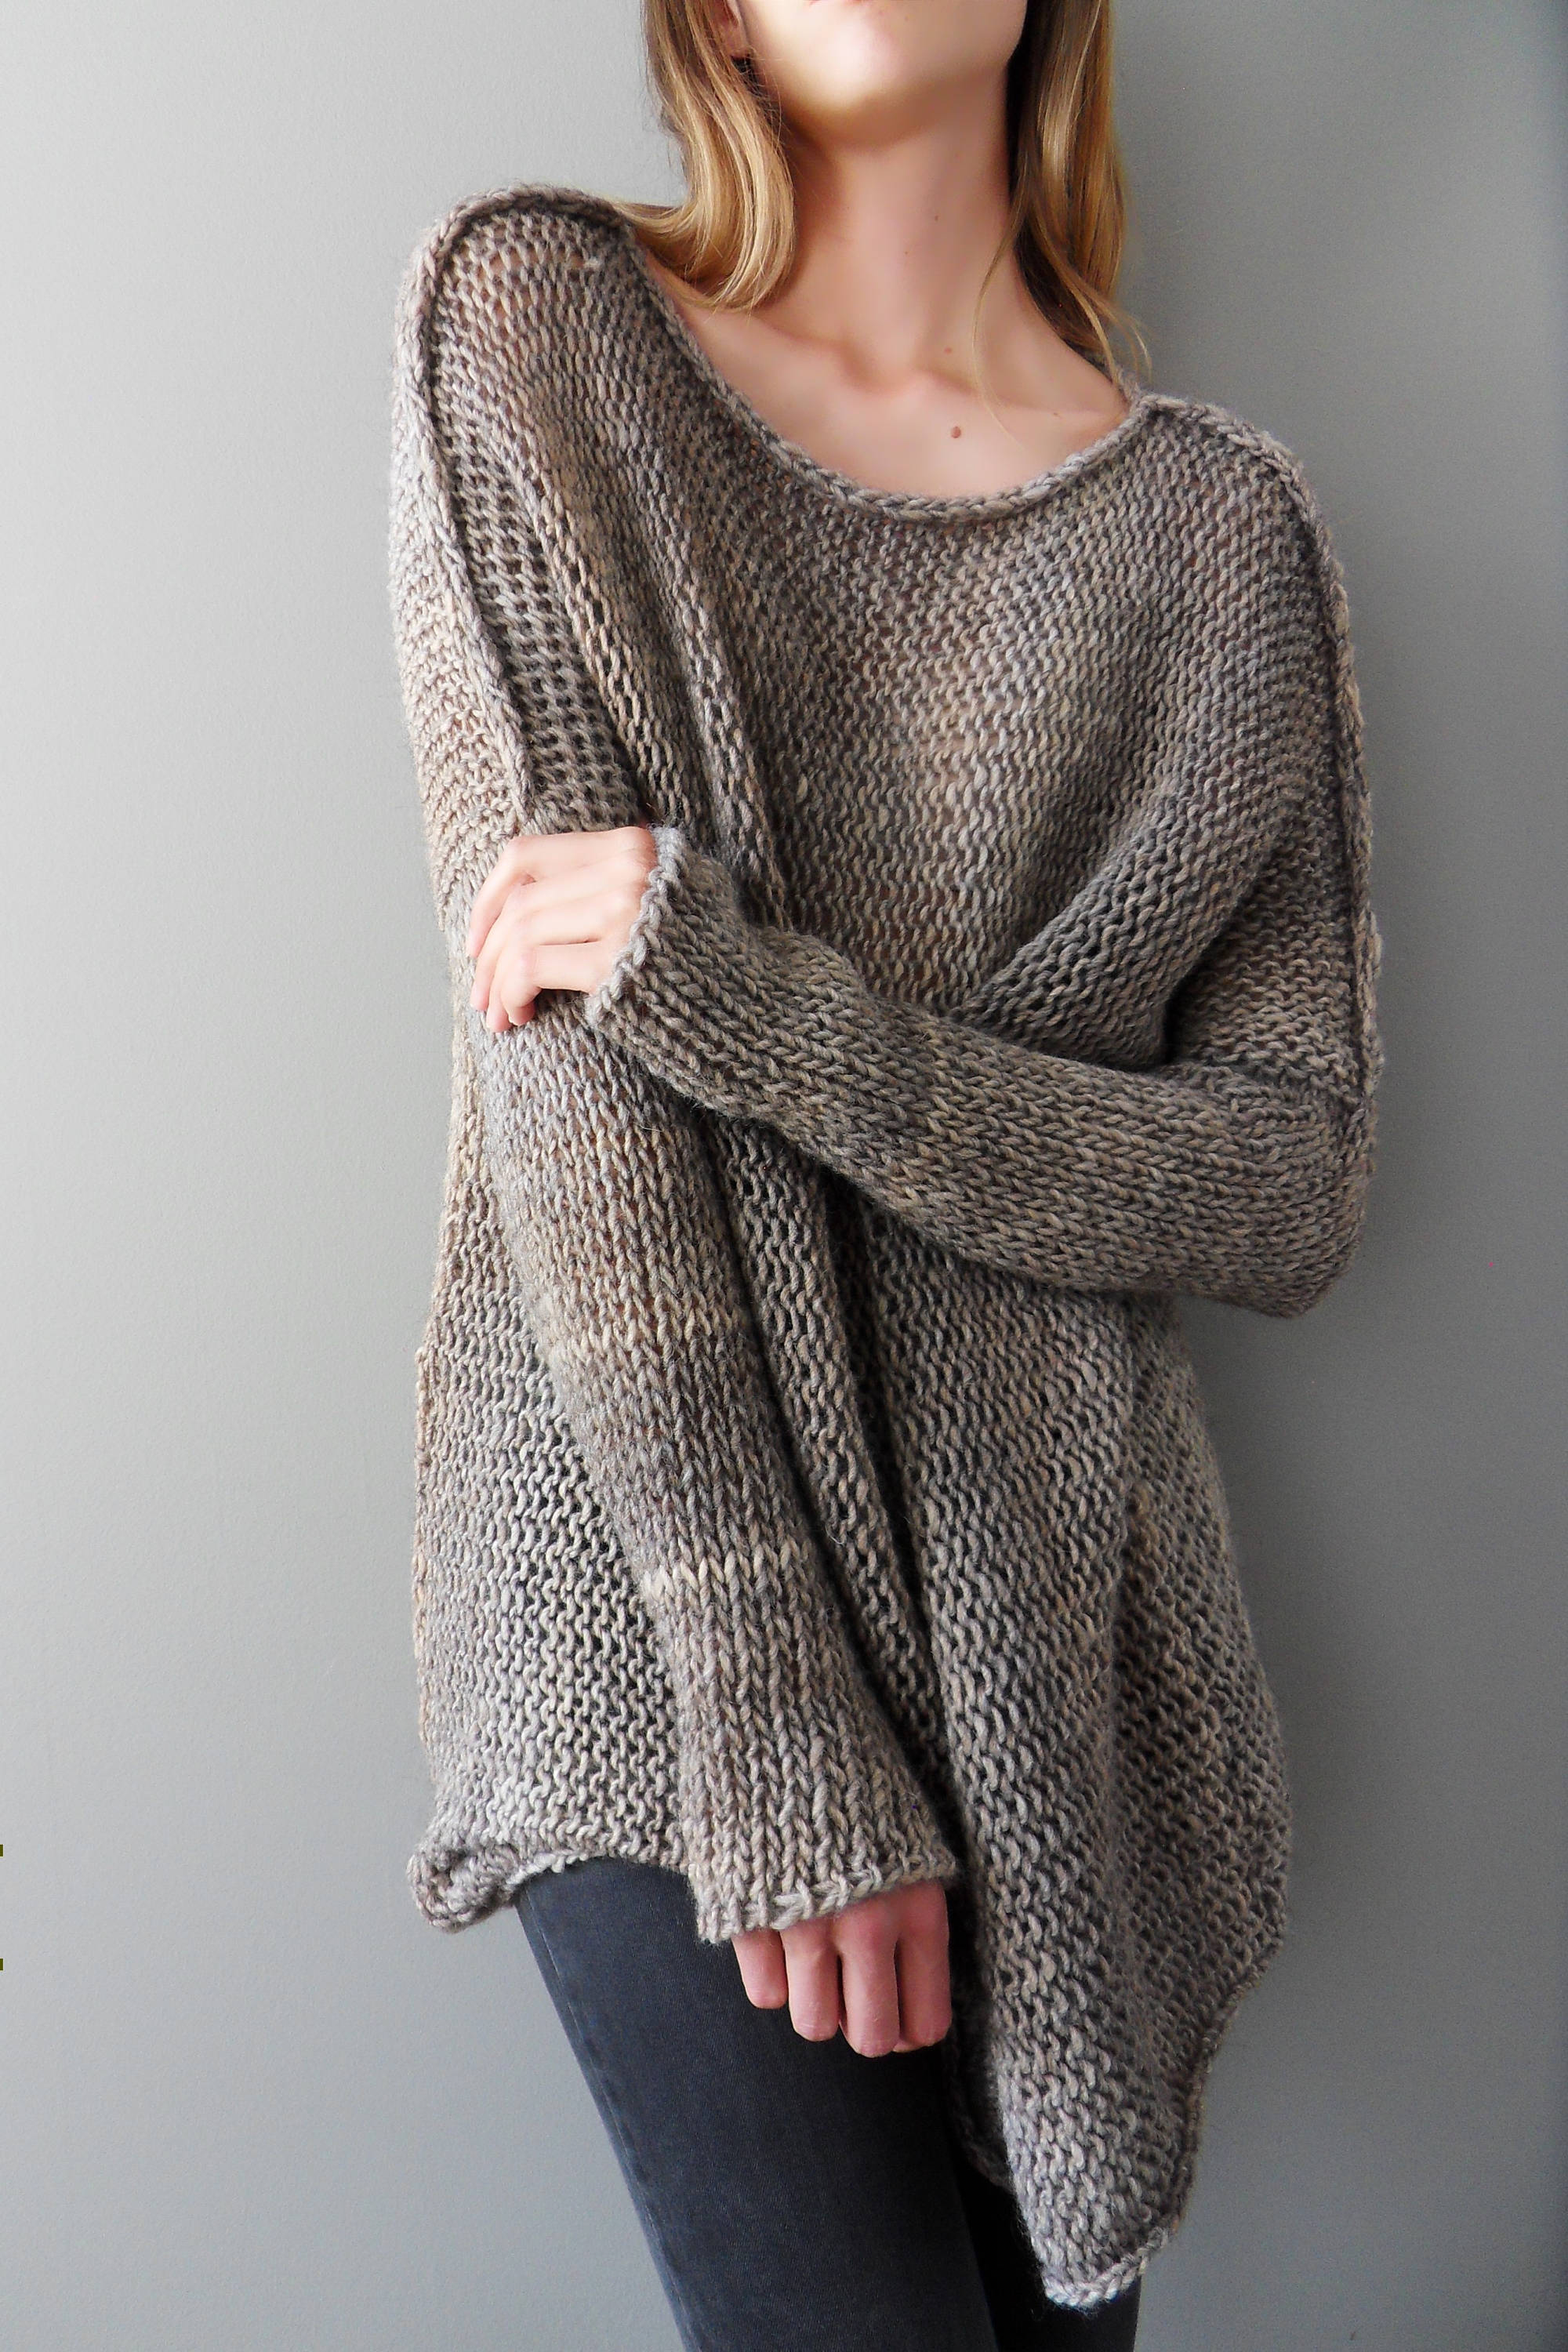 Alpaca Oversized Slouchy sweater. Chunky knit tunic. Thumb | Etsy